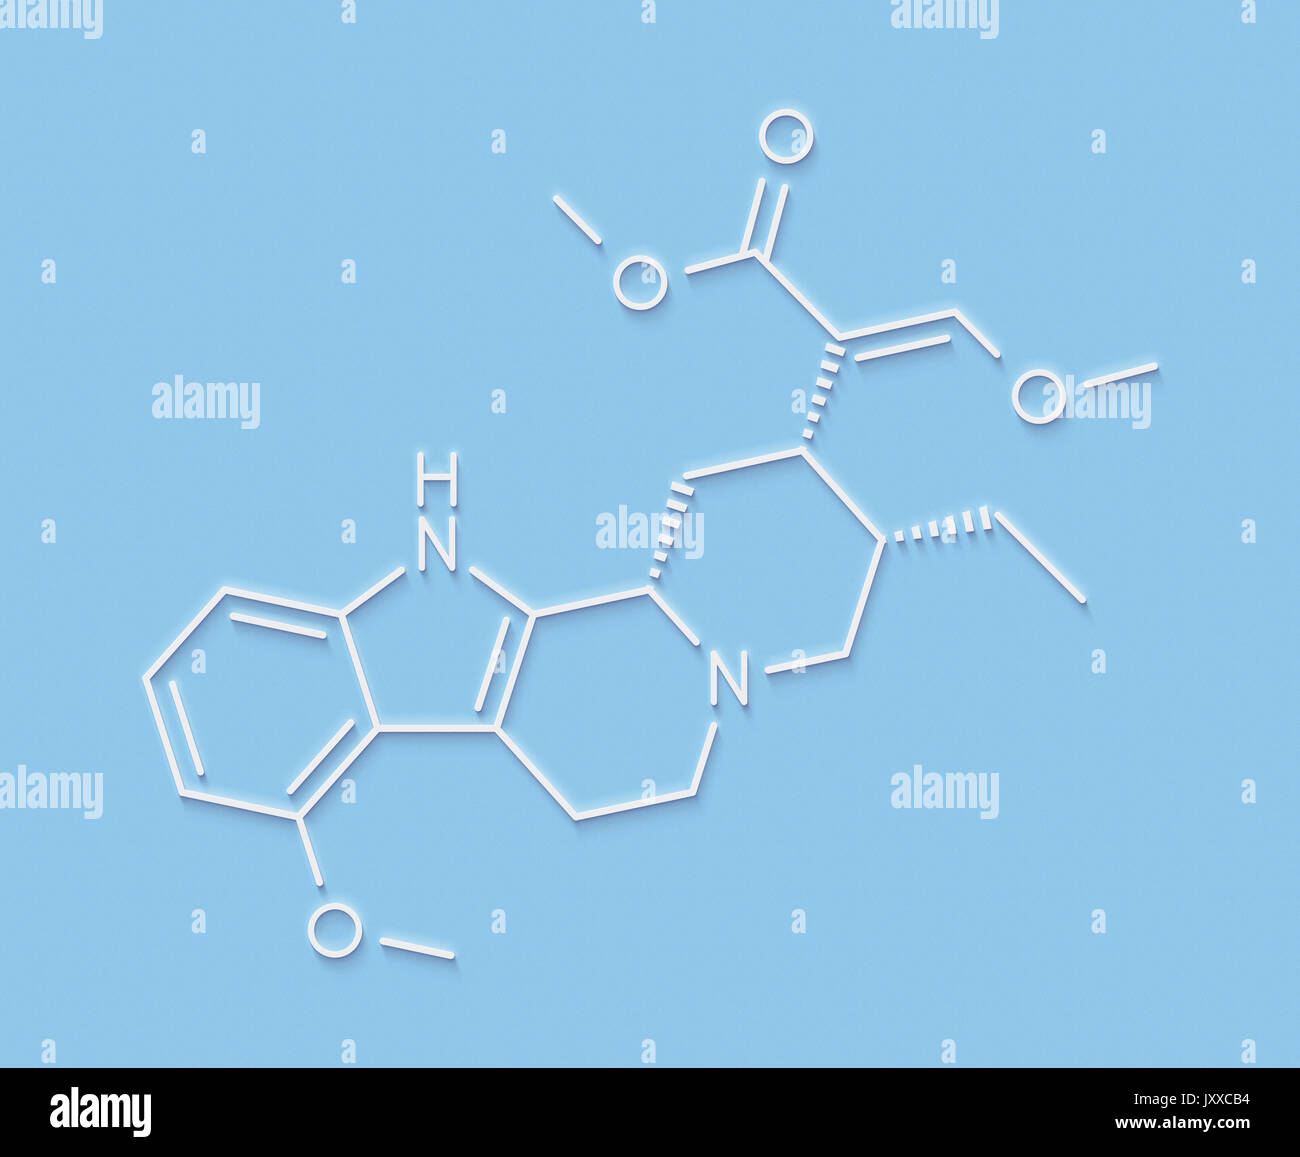 Mitragynine molecule. Herbal alkaloid present in kratom (ketum, Mitragyna speciosa). Skeletal formula. Stock Photo